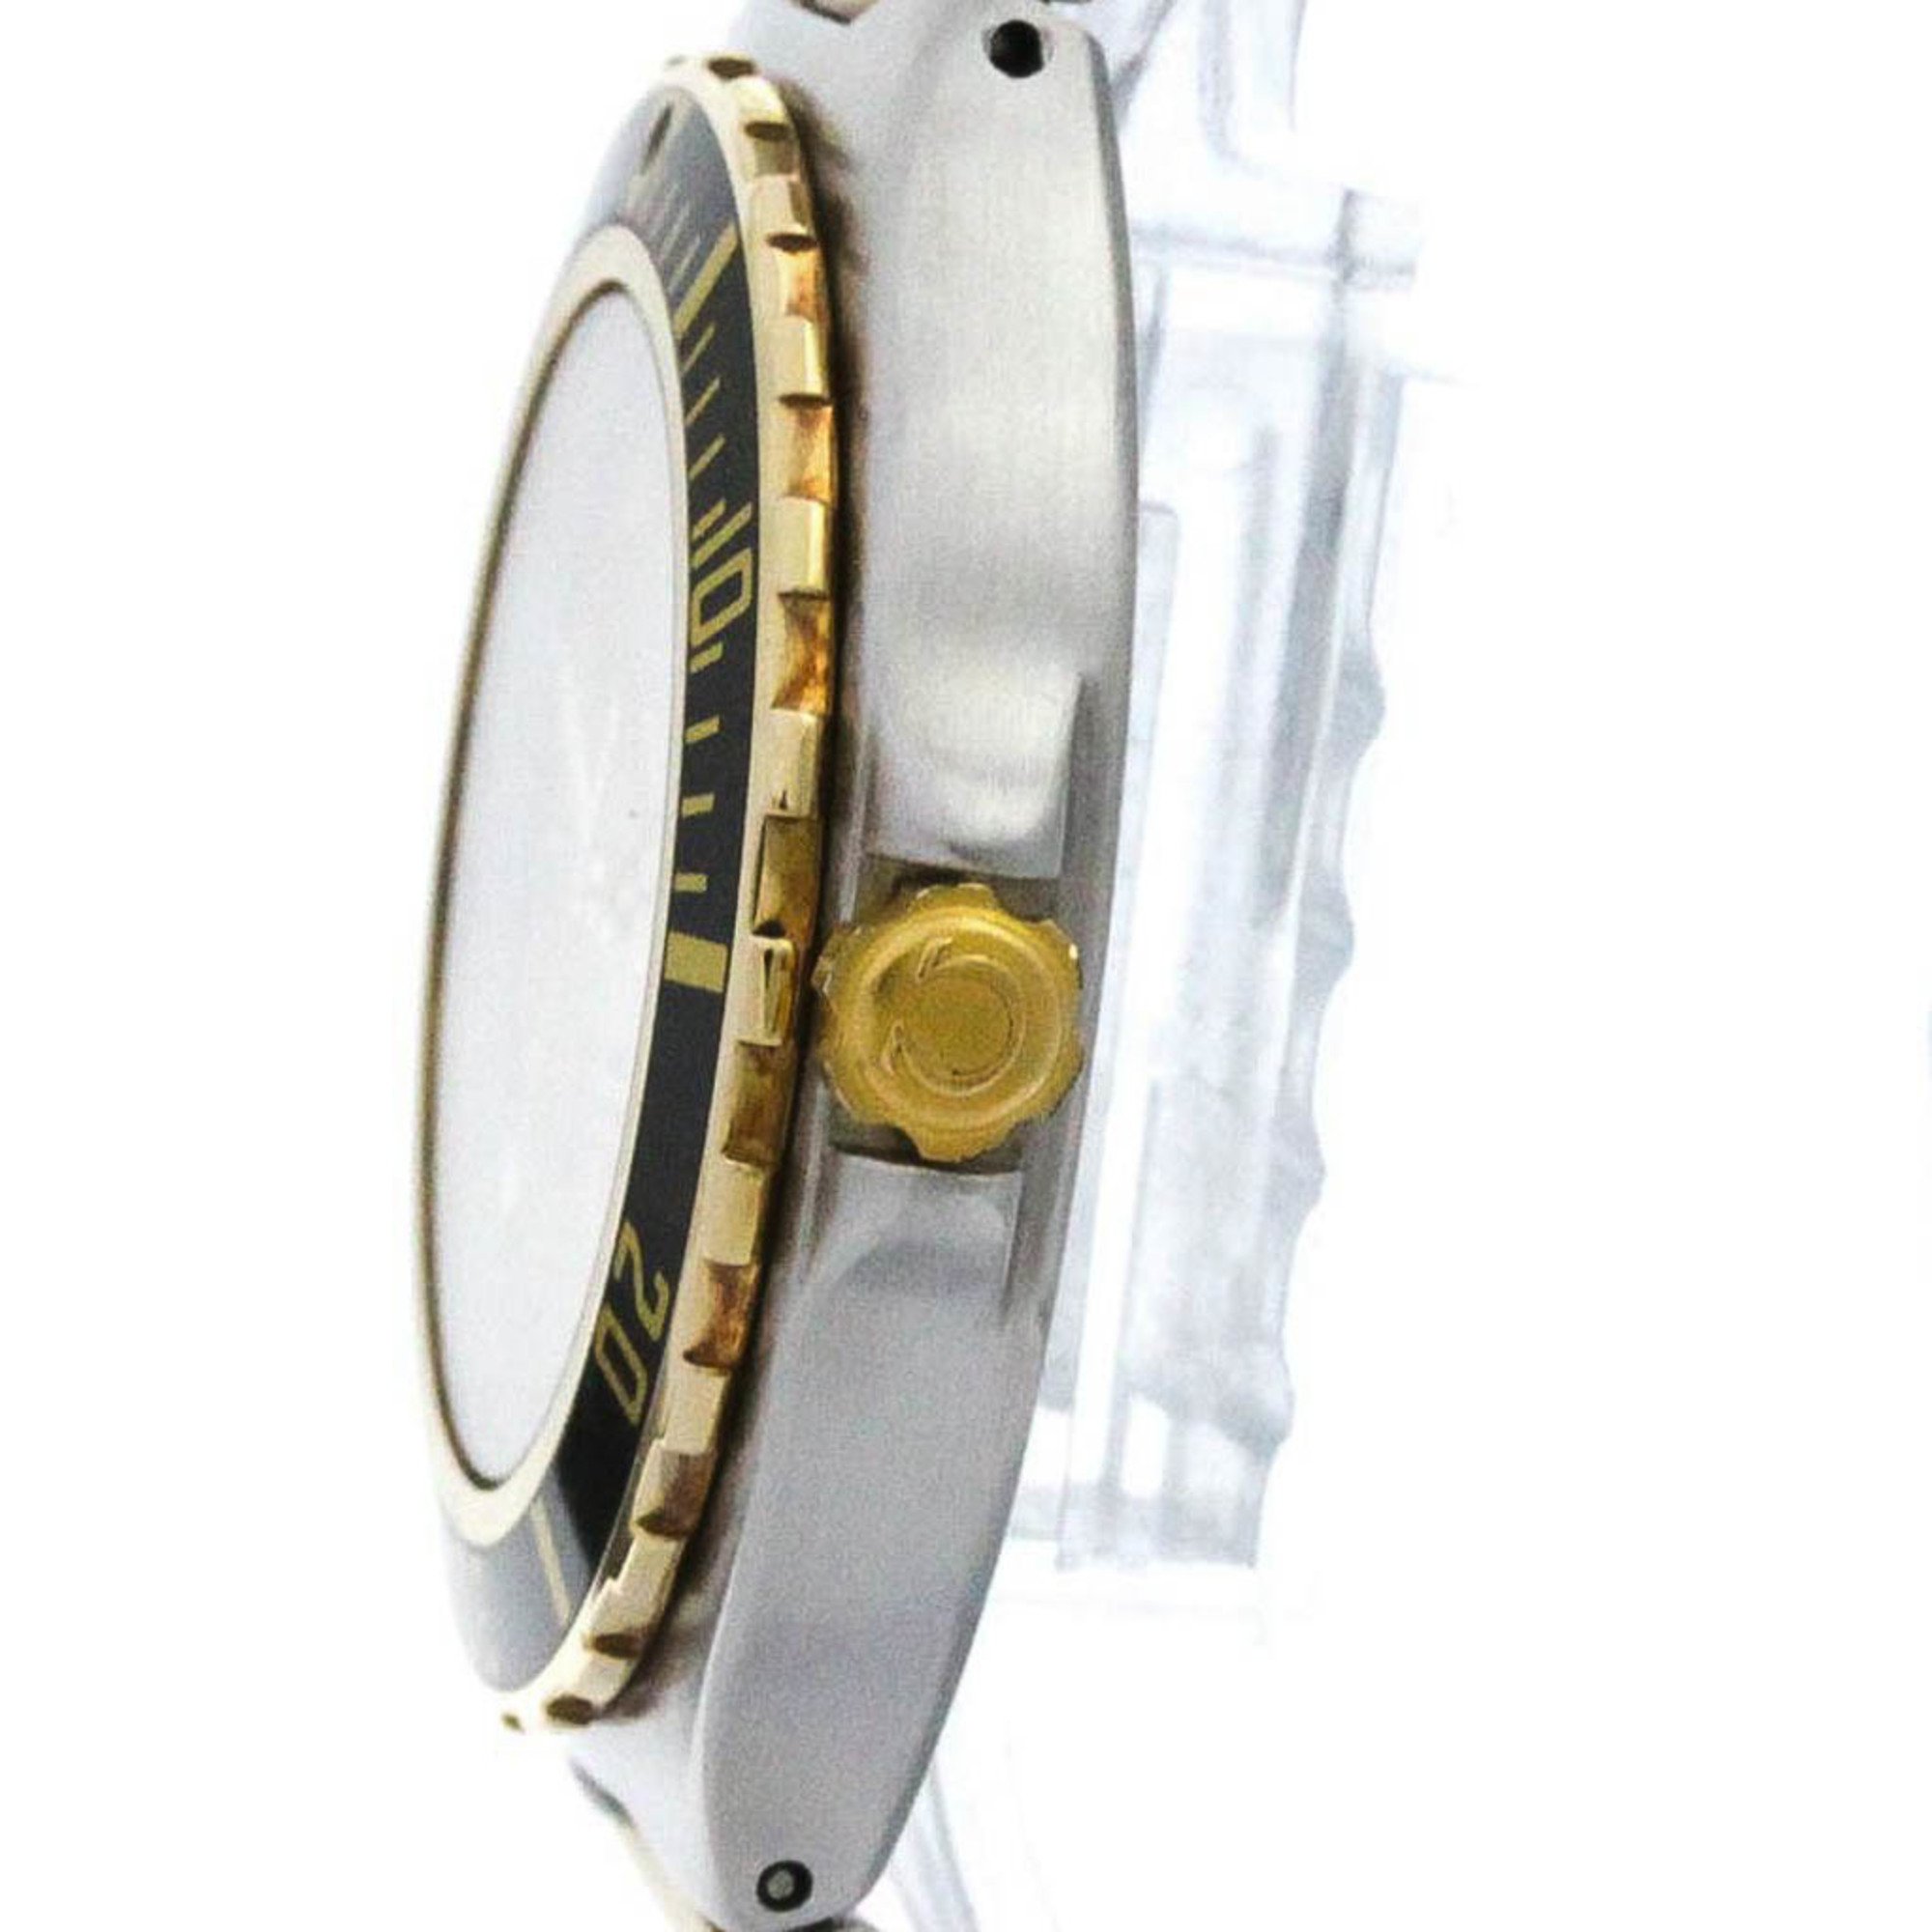 Polished OMEGA Seamaster Professional 18K Gold Steel Watch 396.1042 BF573278